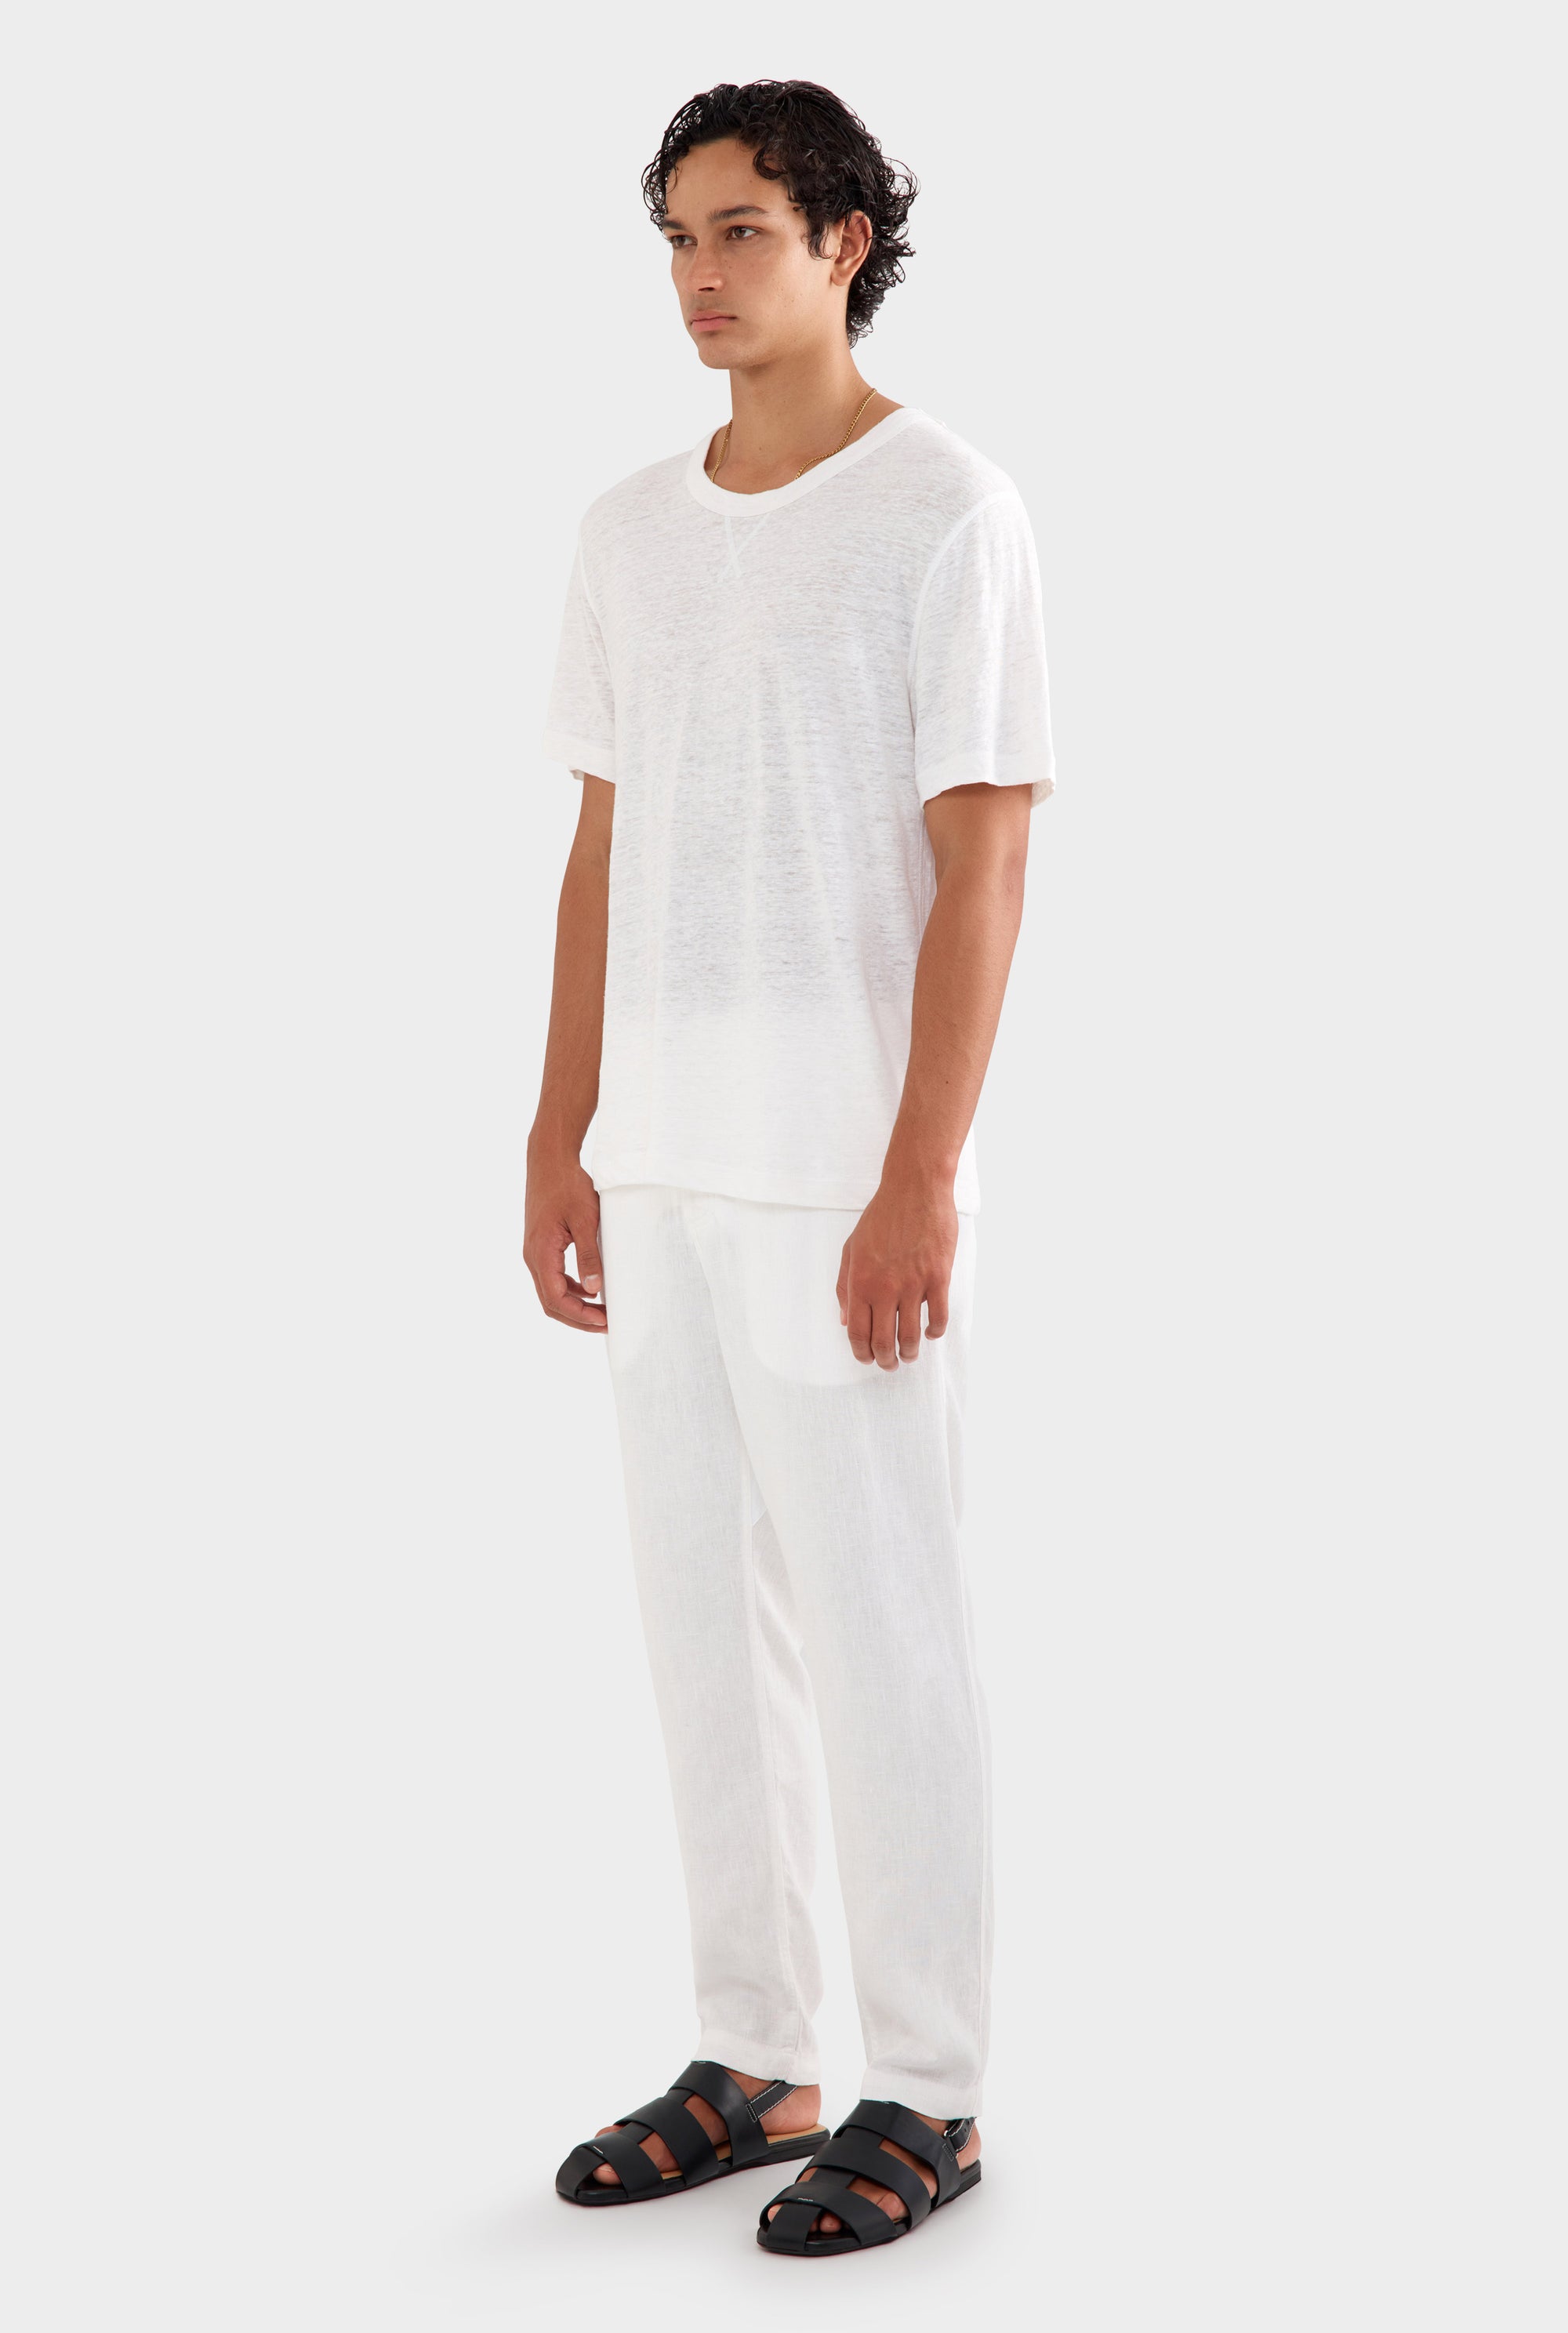 Coverstitch Linen T-Shirt - White